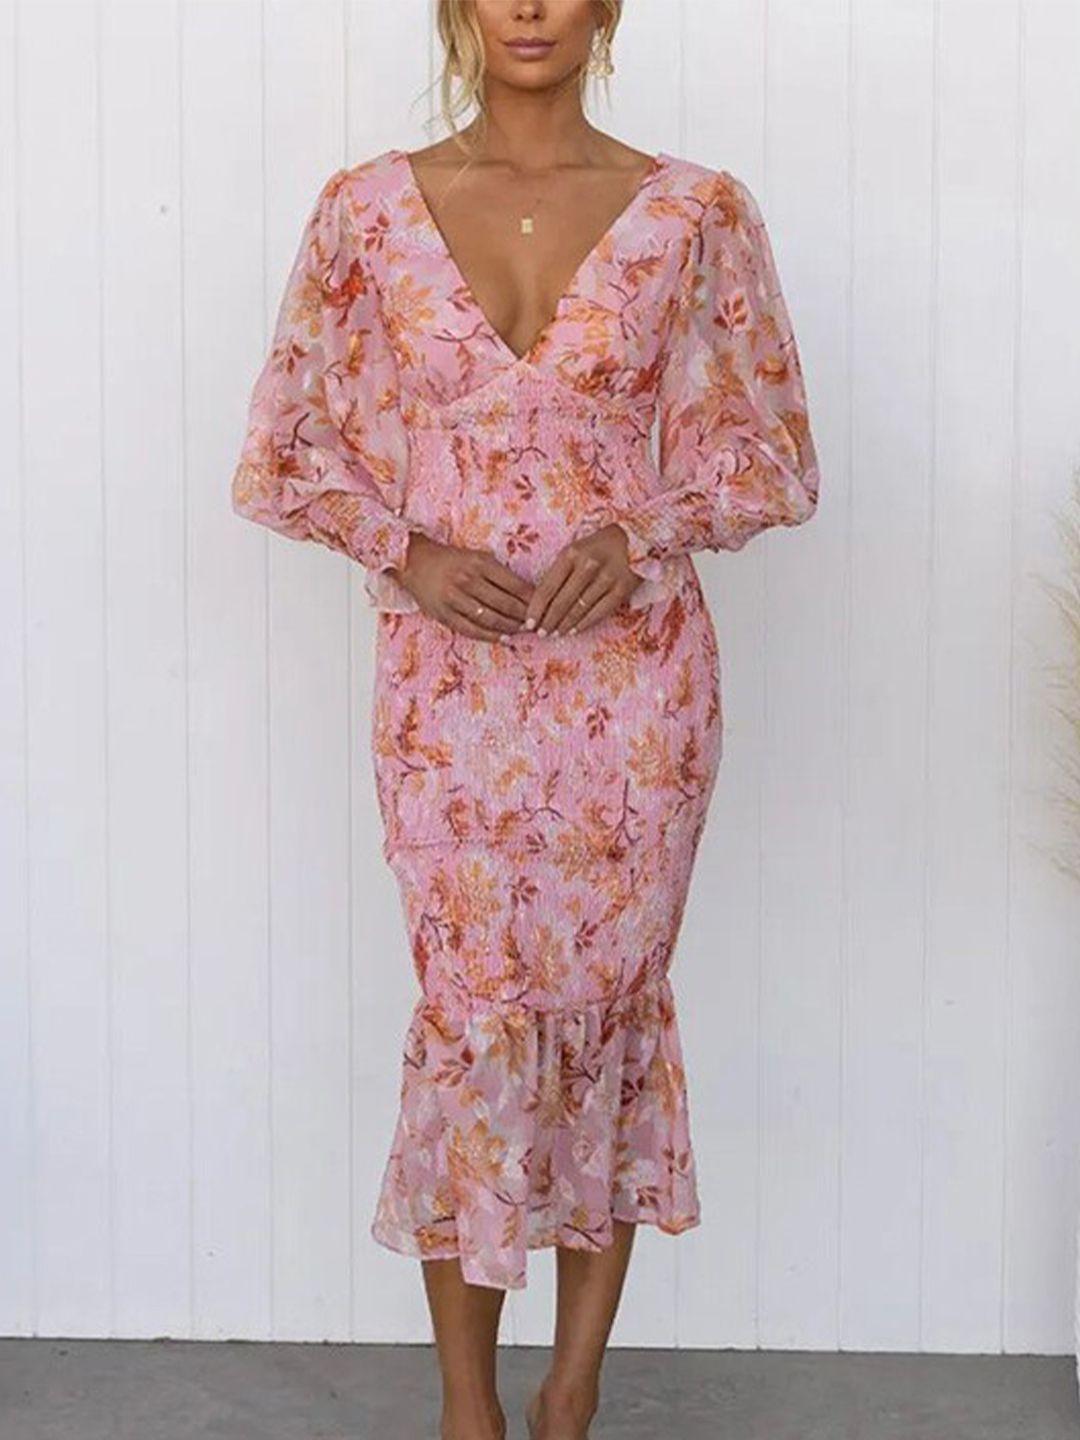 stylecast pink floral printed smocked detail sheath midi dress